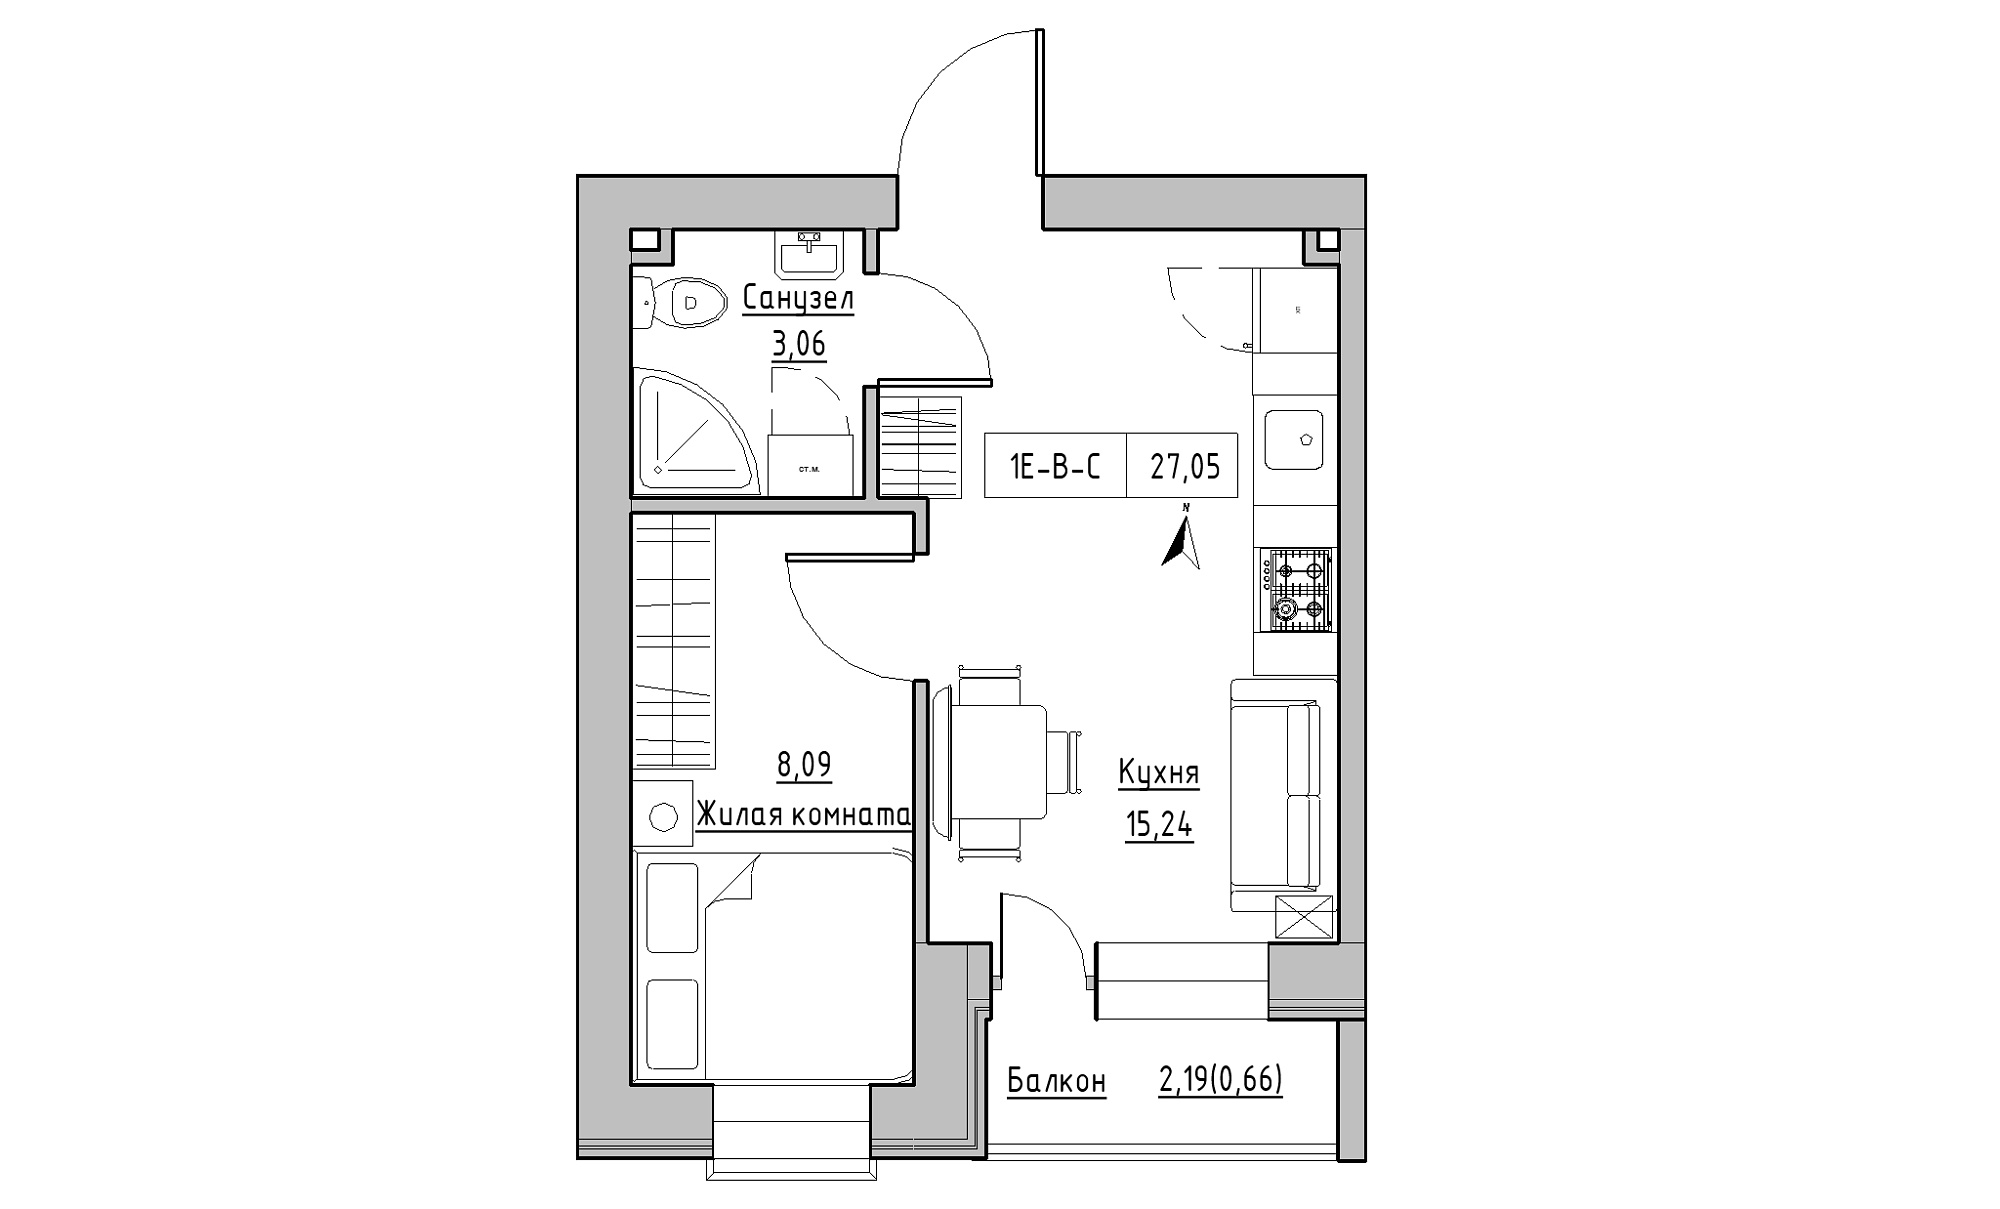 Planning 1-rm flats area 27.05m2, KS-016-05/0008.